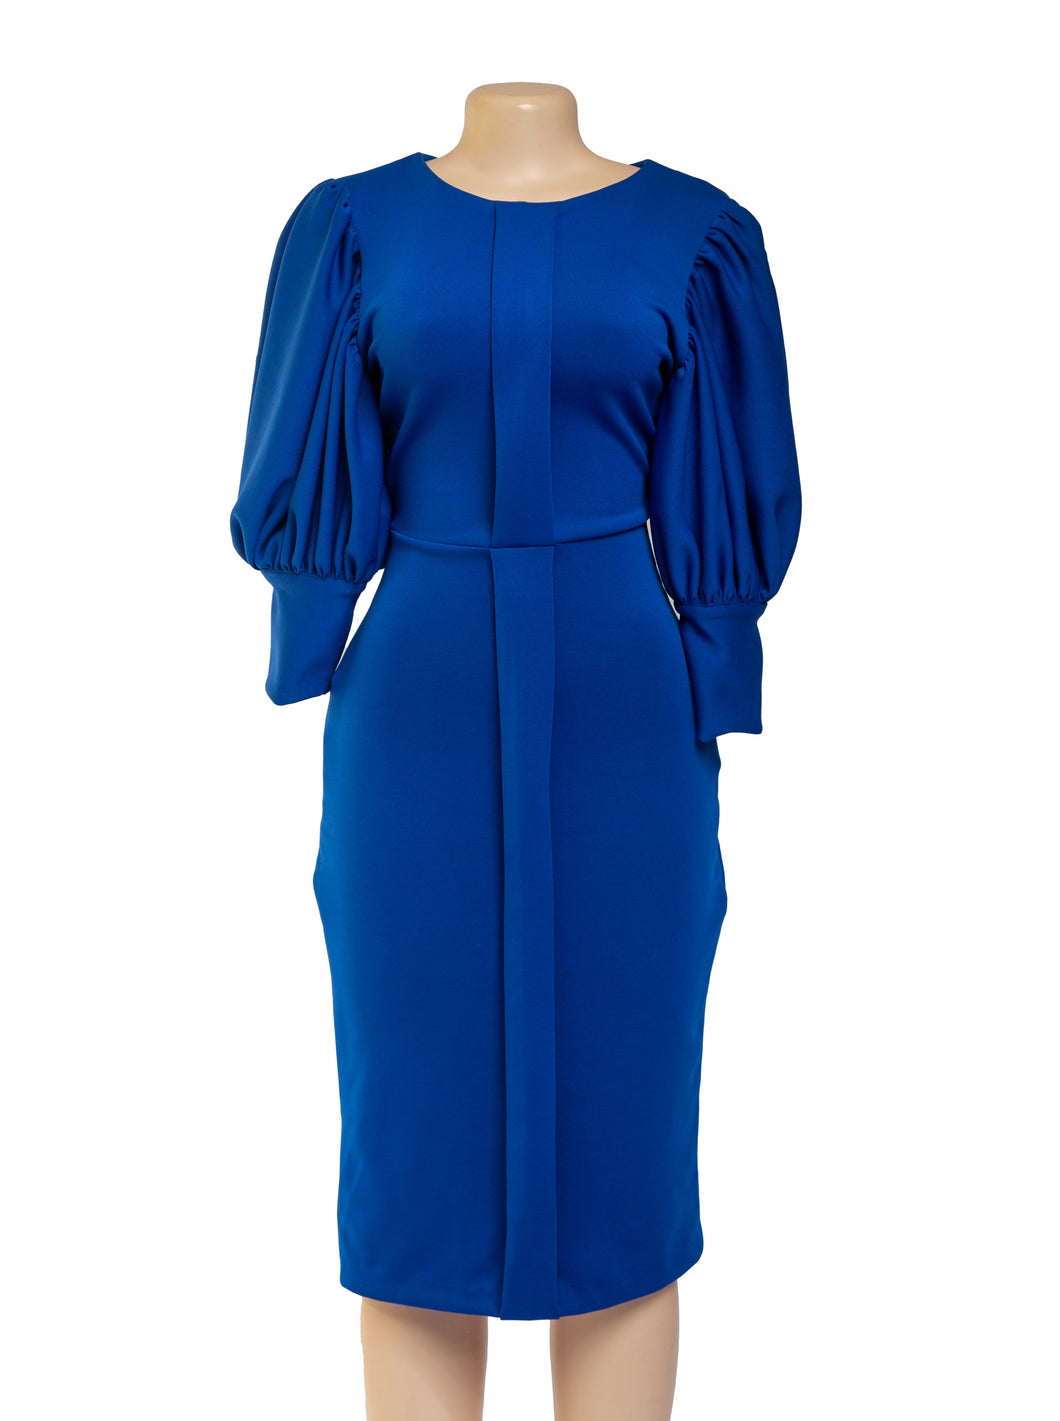 GAIL BLU – Blue stretchy midi dress